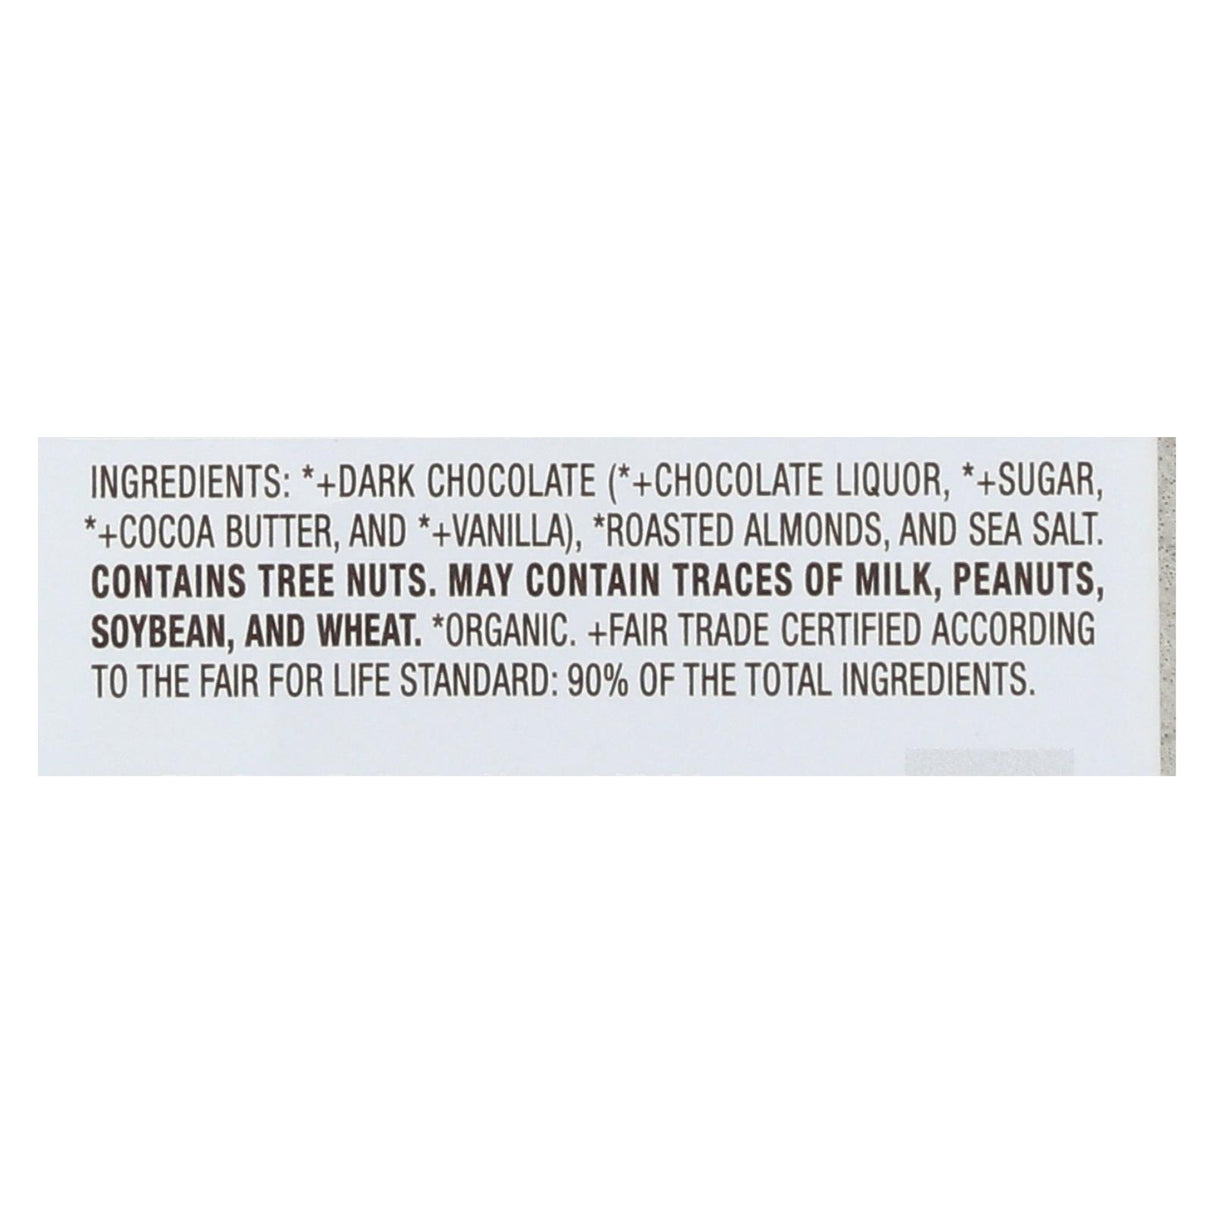 Lake Champlain Chocolates Almonds & Sea Salt 72% Dark Chocolate Bar - 3 Oz. (Case of 12) - Cozy Farm 